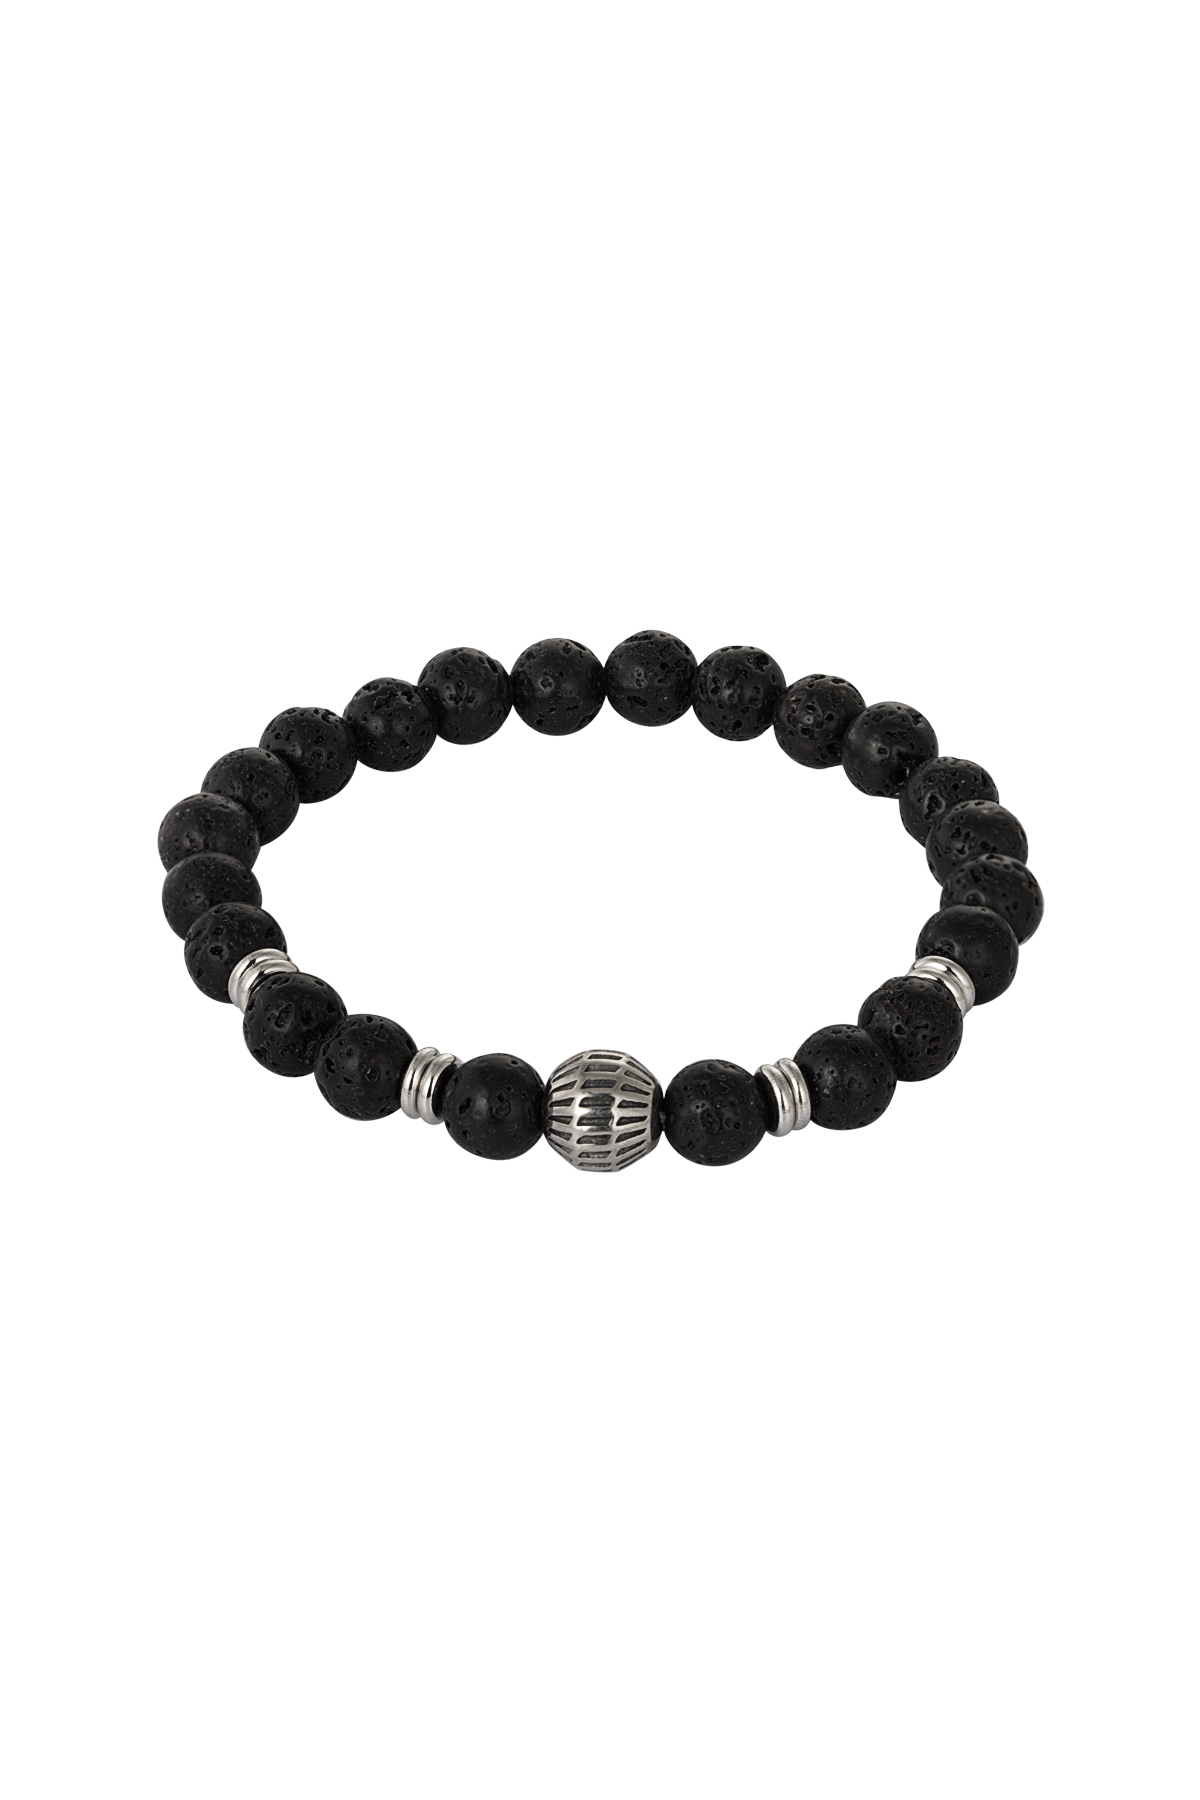 Simple men's bead bracelet charm - black 